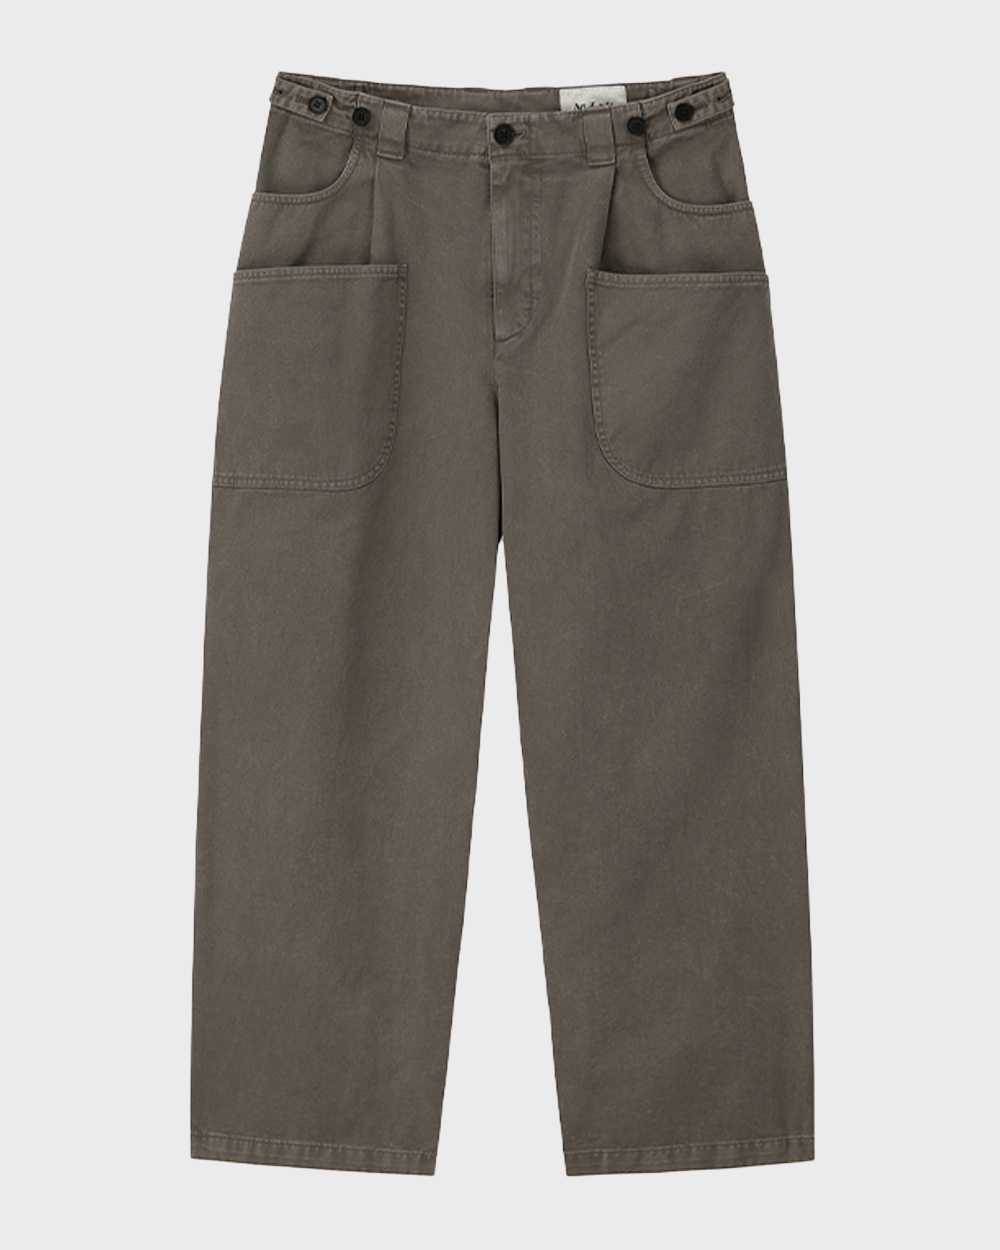 French Workwear Pants (Vintage Brown)